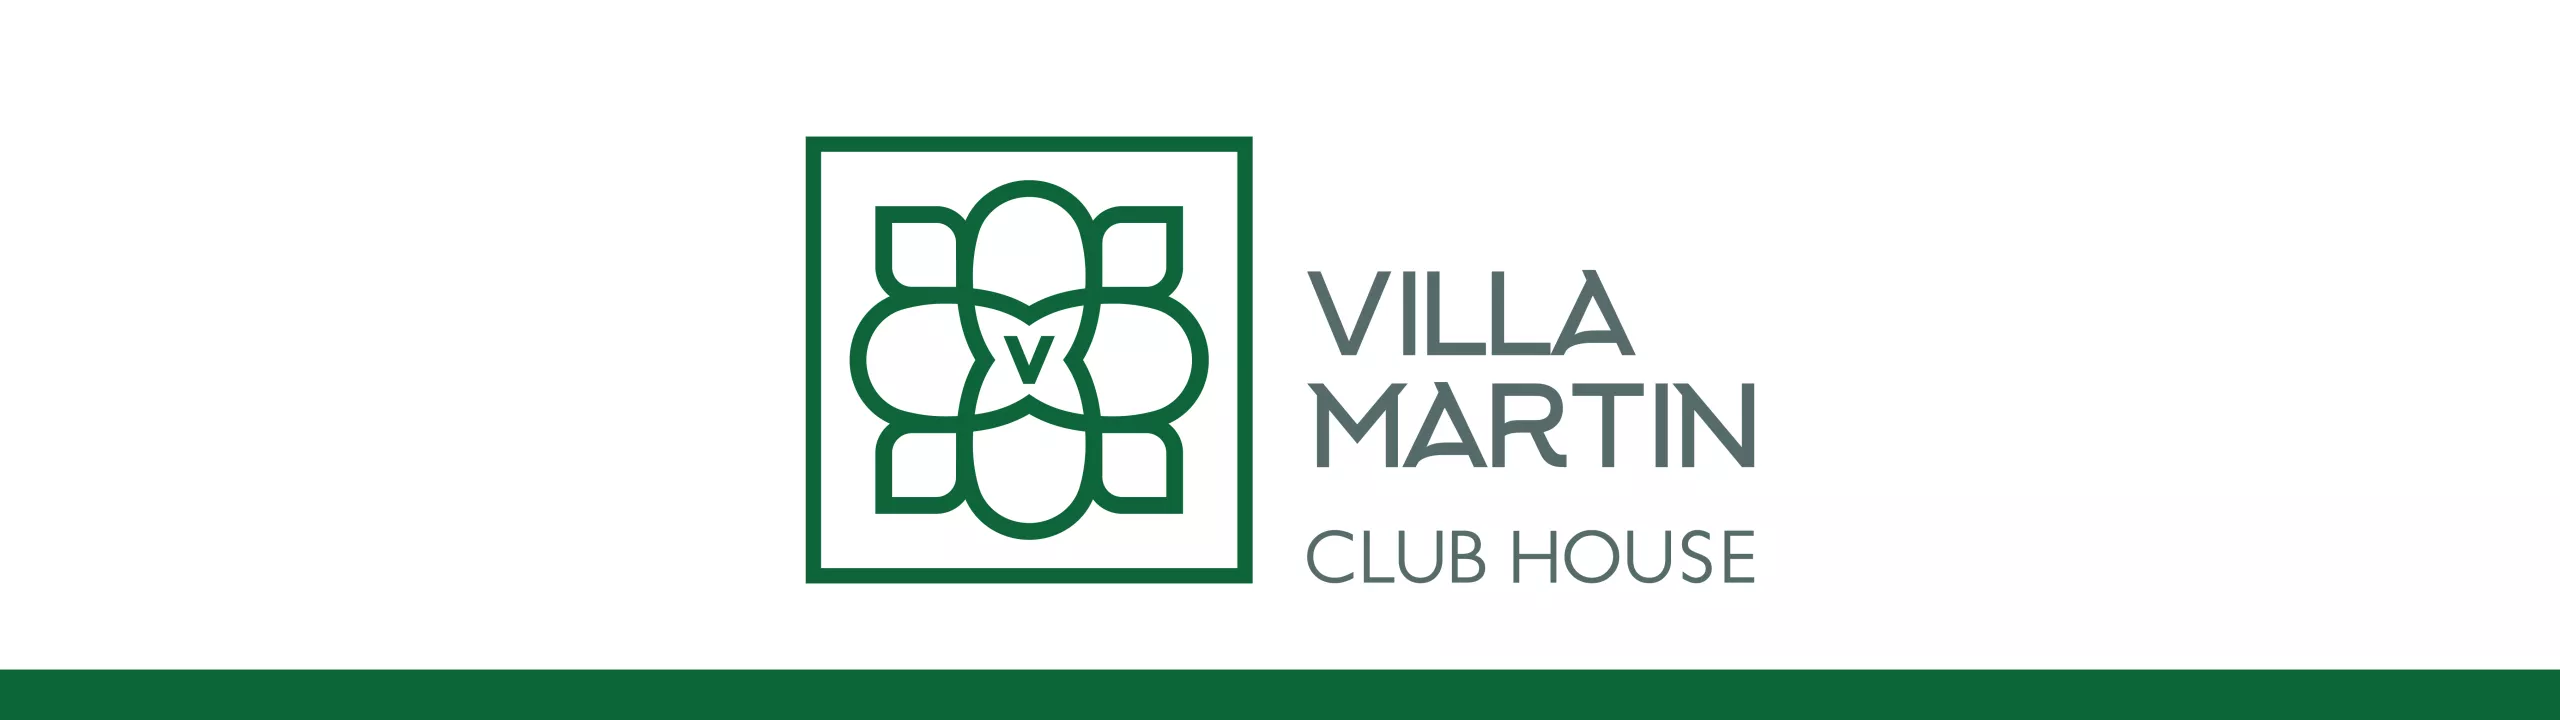 Villamartín Club House